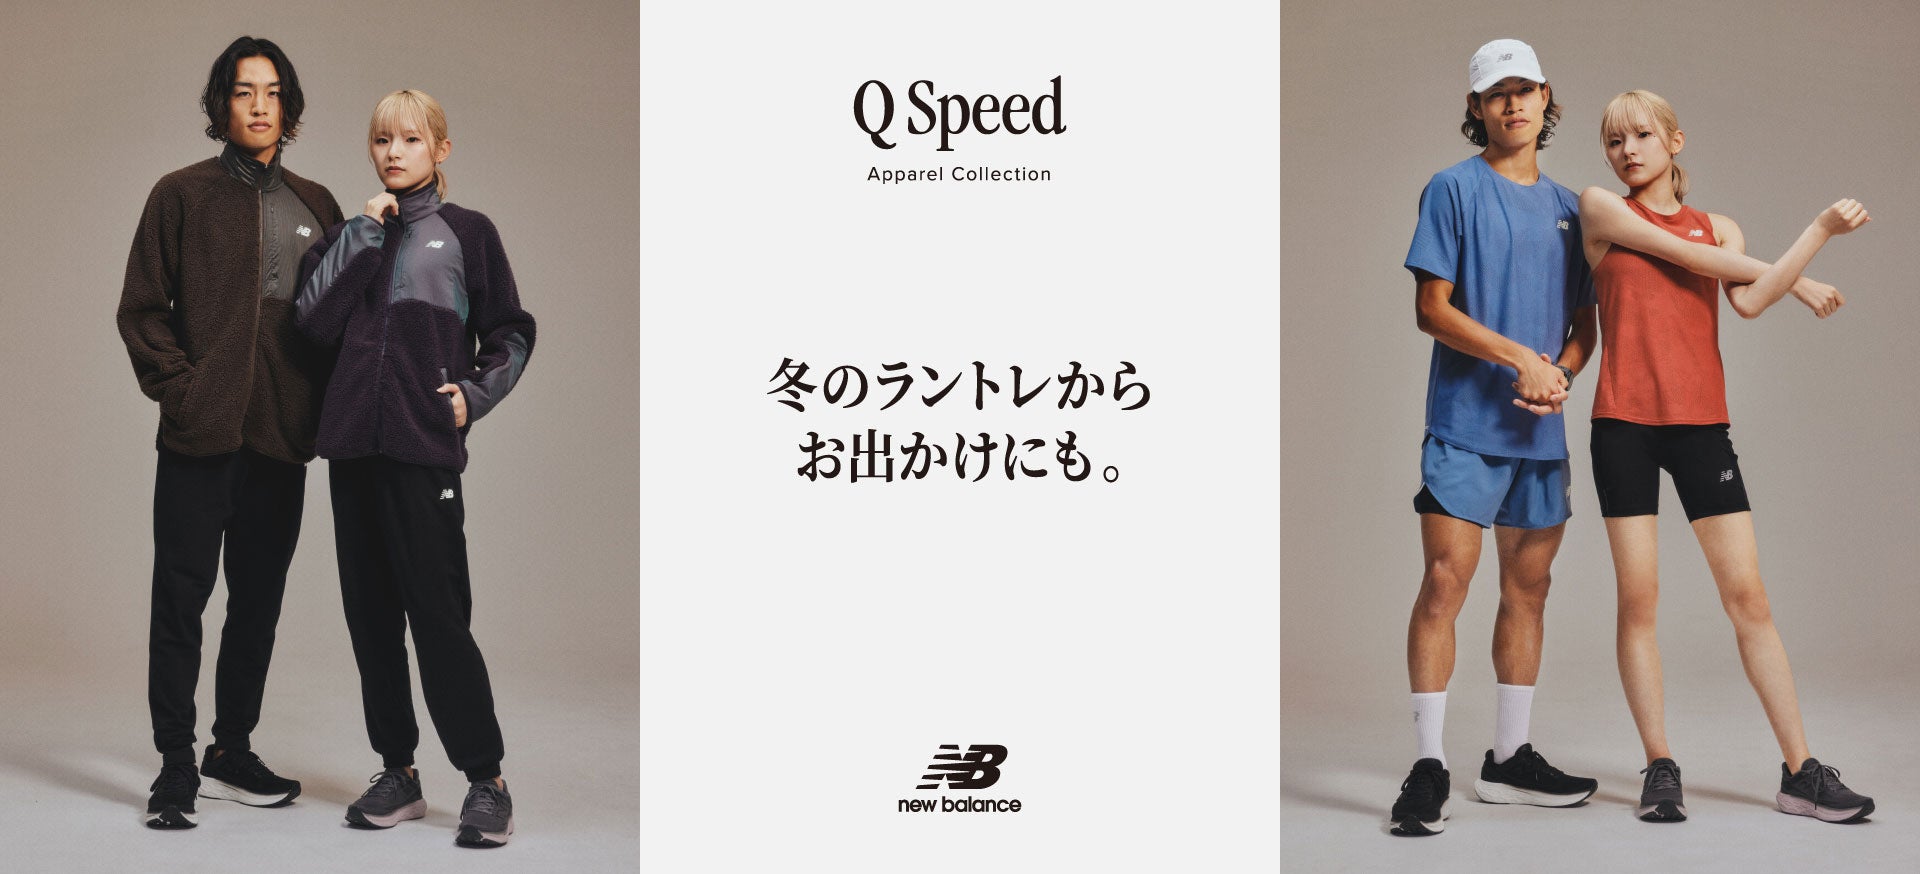 Q Speed